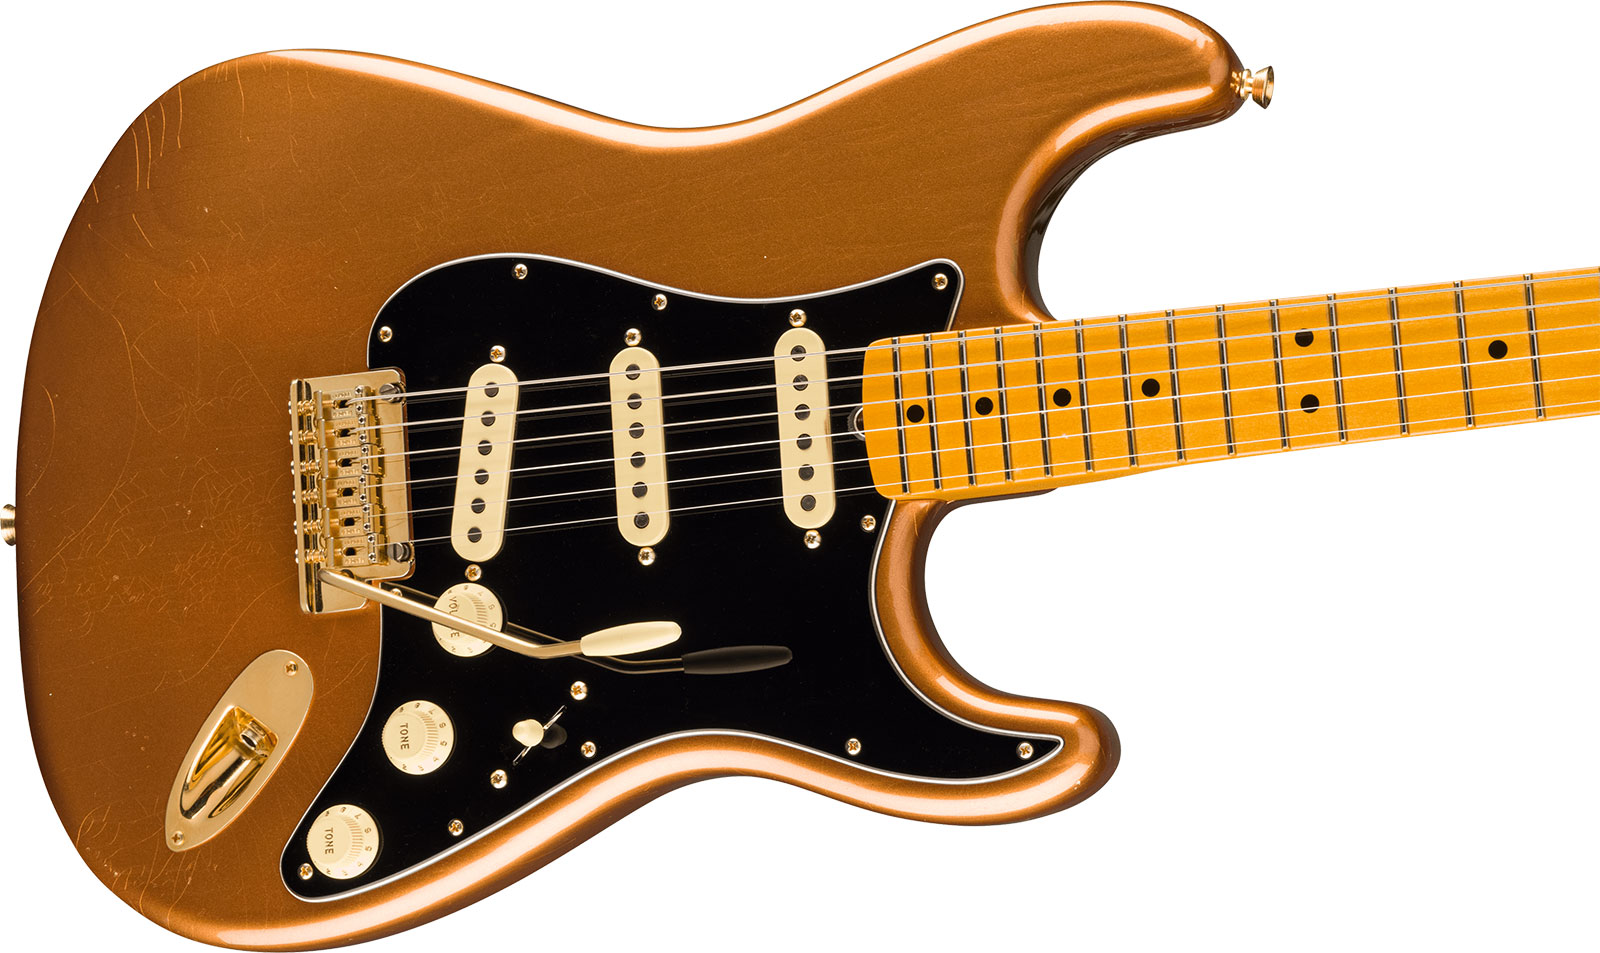 Fender Bruno Mars Strat Usa Signature 3s Trem Mn - Mars Mocha - Guitarra eléctrica de autor - Variation 2